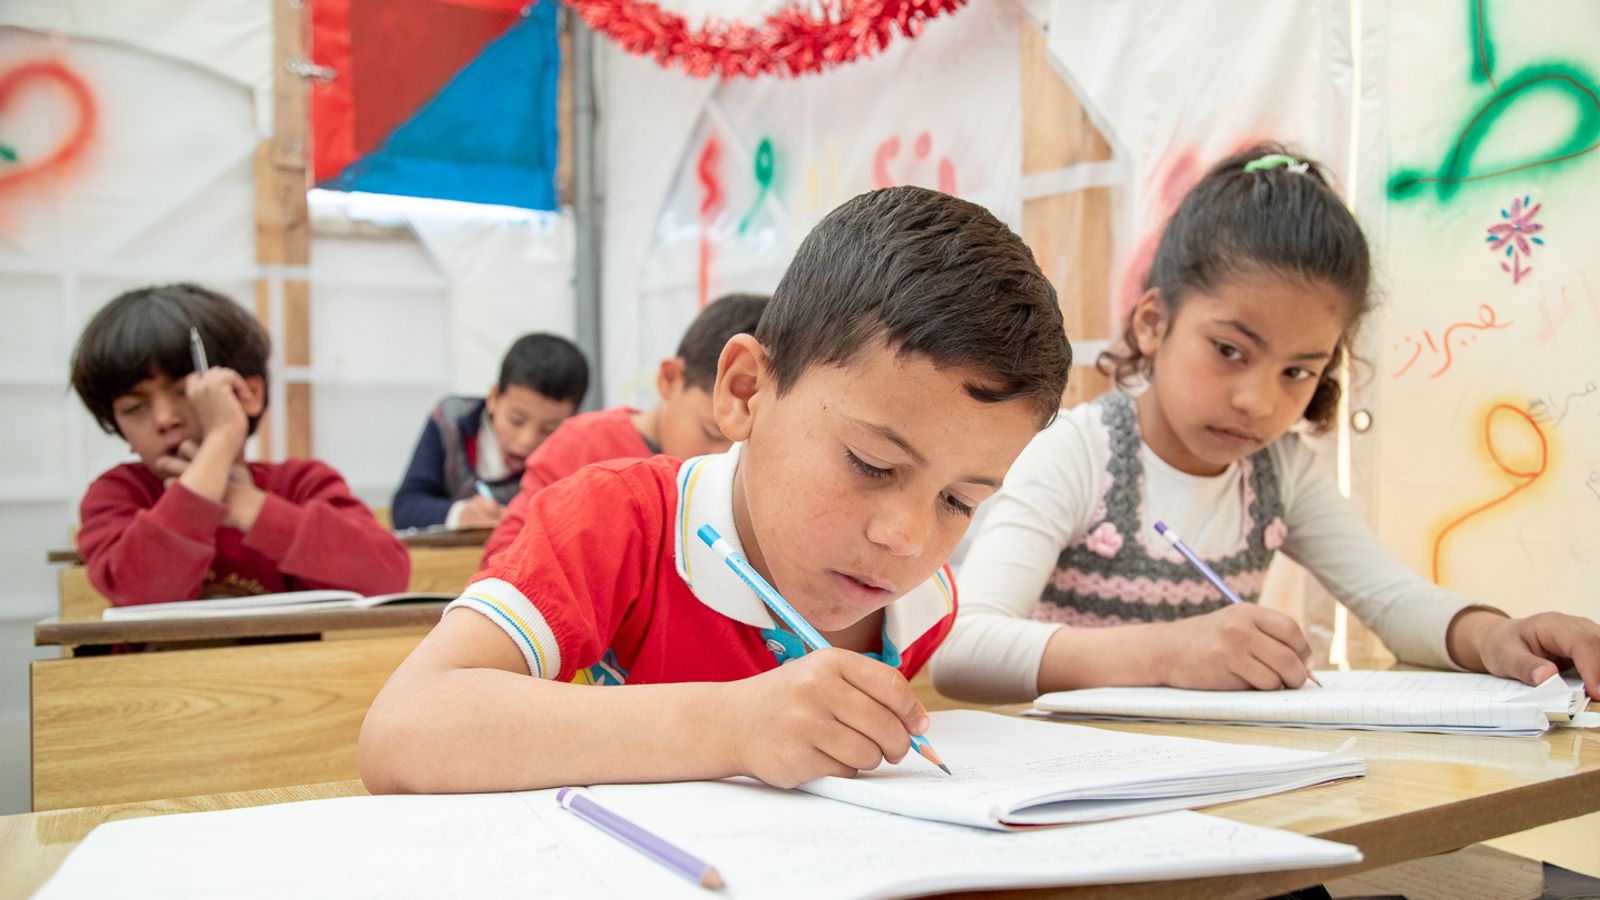 How a Munich association saves thousands of children in Lebanon